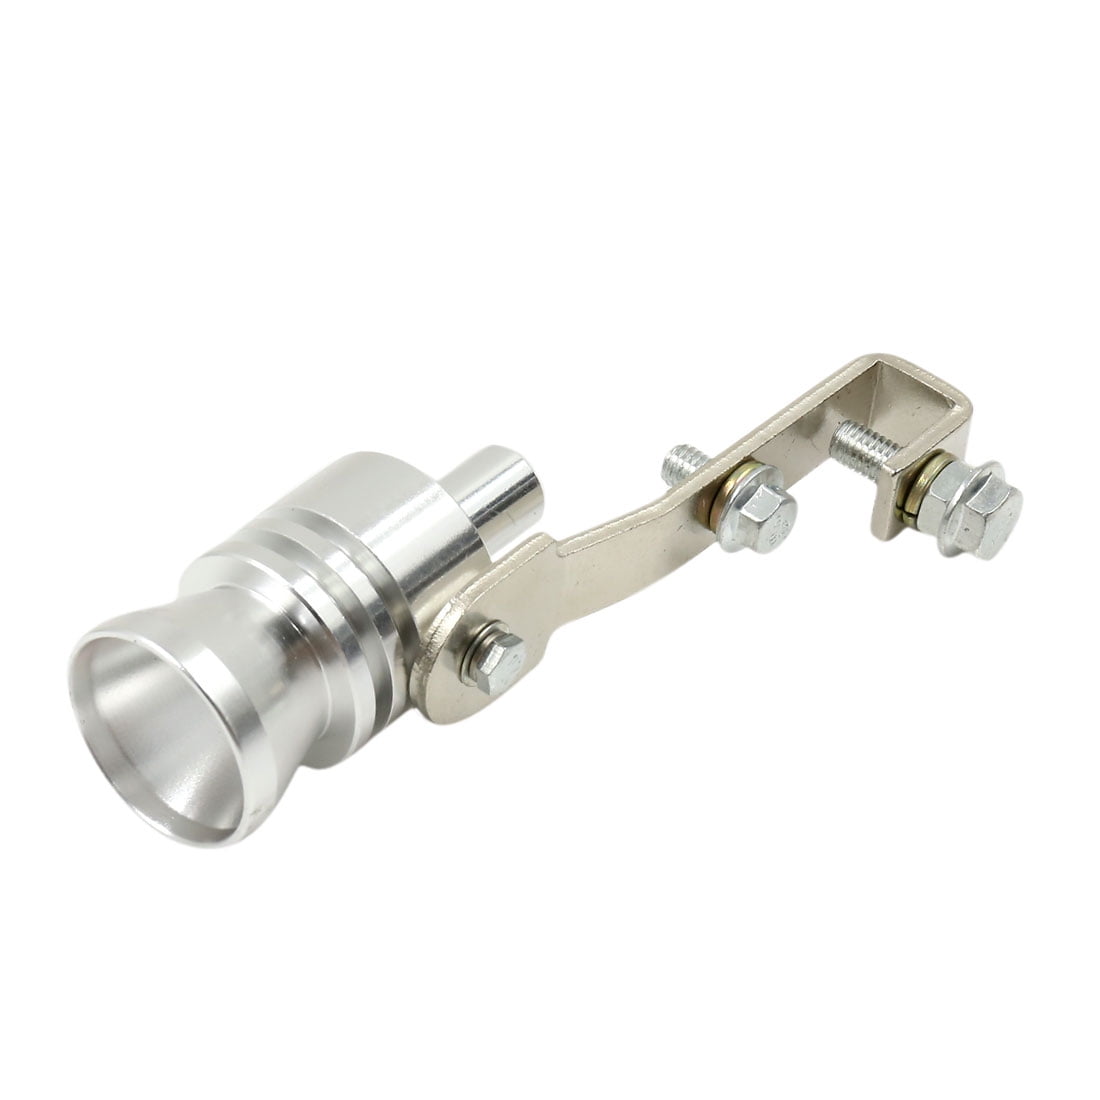 Universal Aluminum Turbo Sound Exhaust Muffler Pipe Whistle Car /  Motorcycle Simulator Whistler, Size: M, Outside Diameter